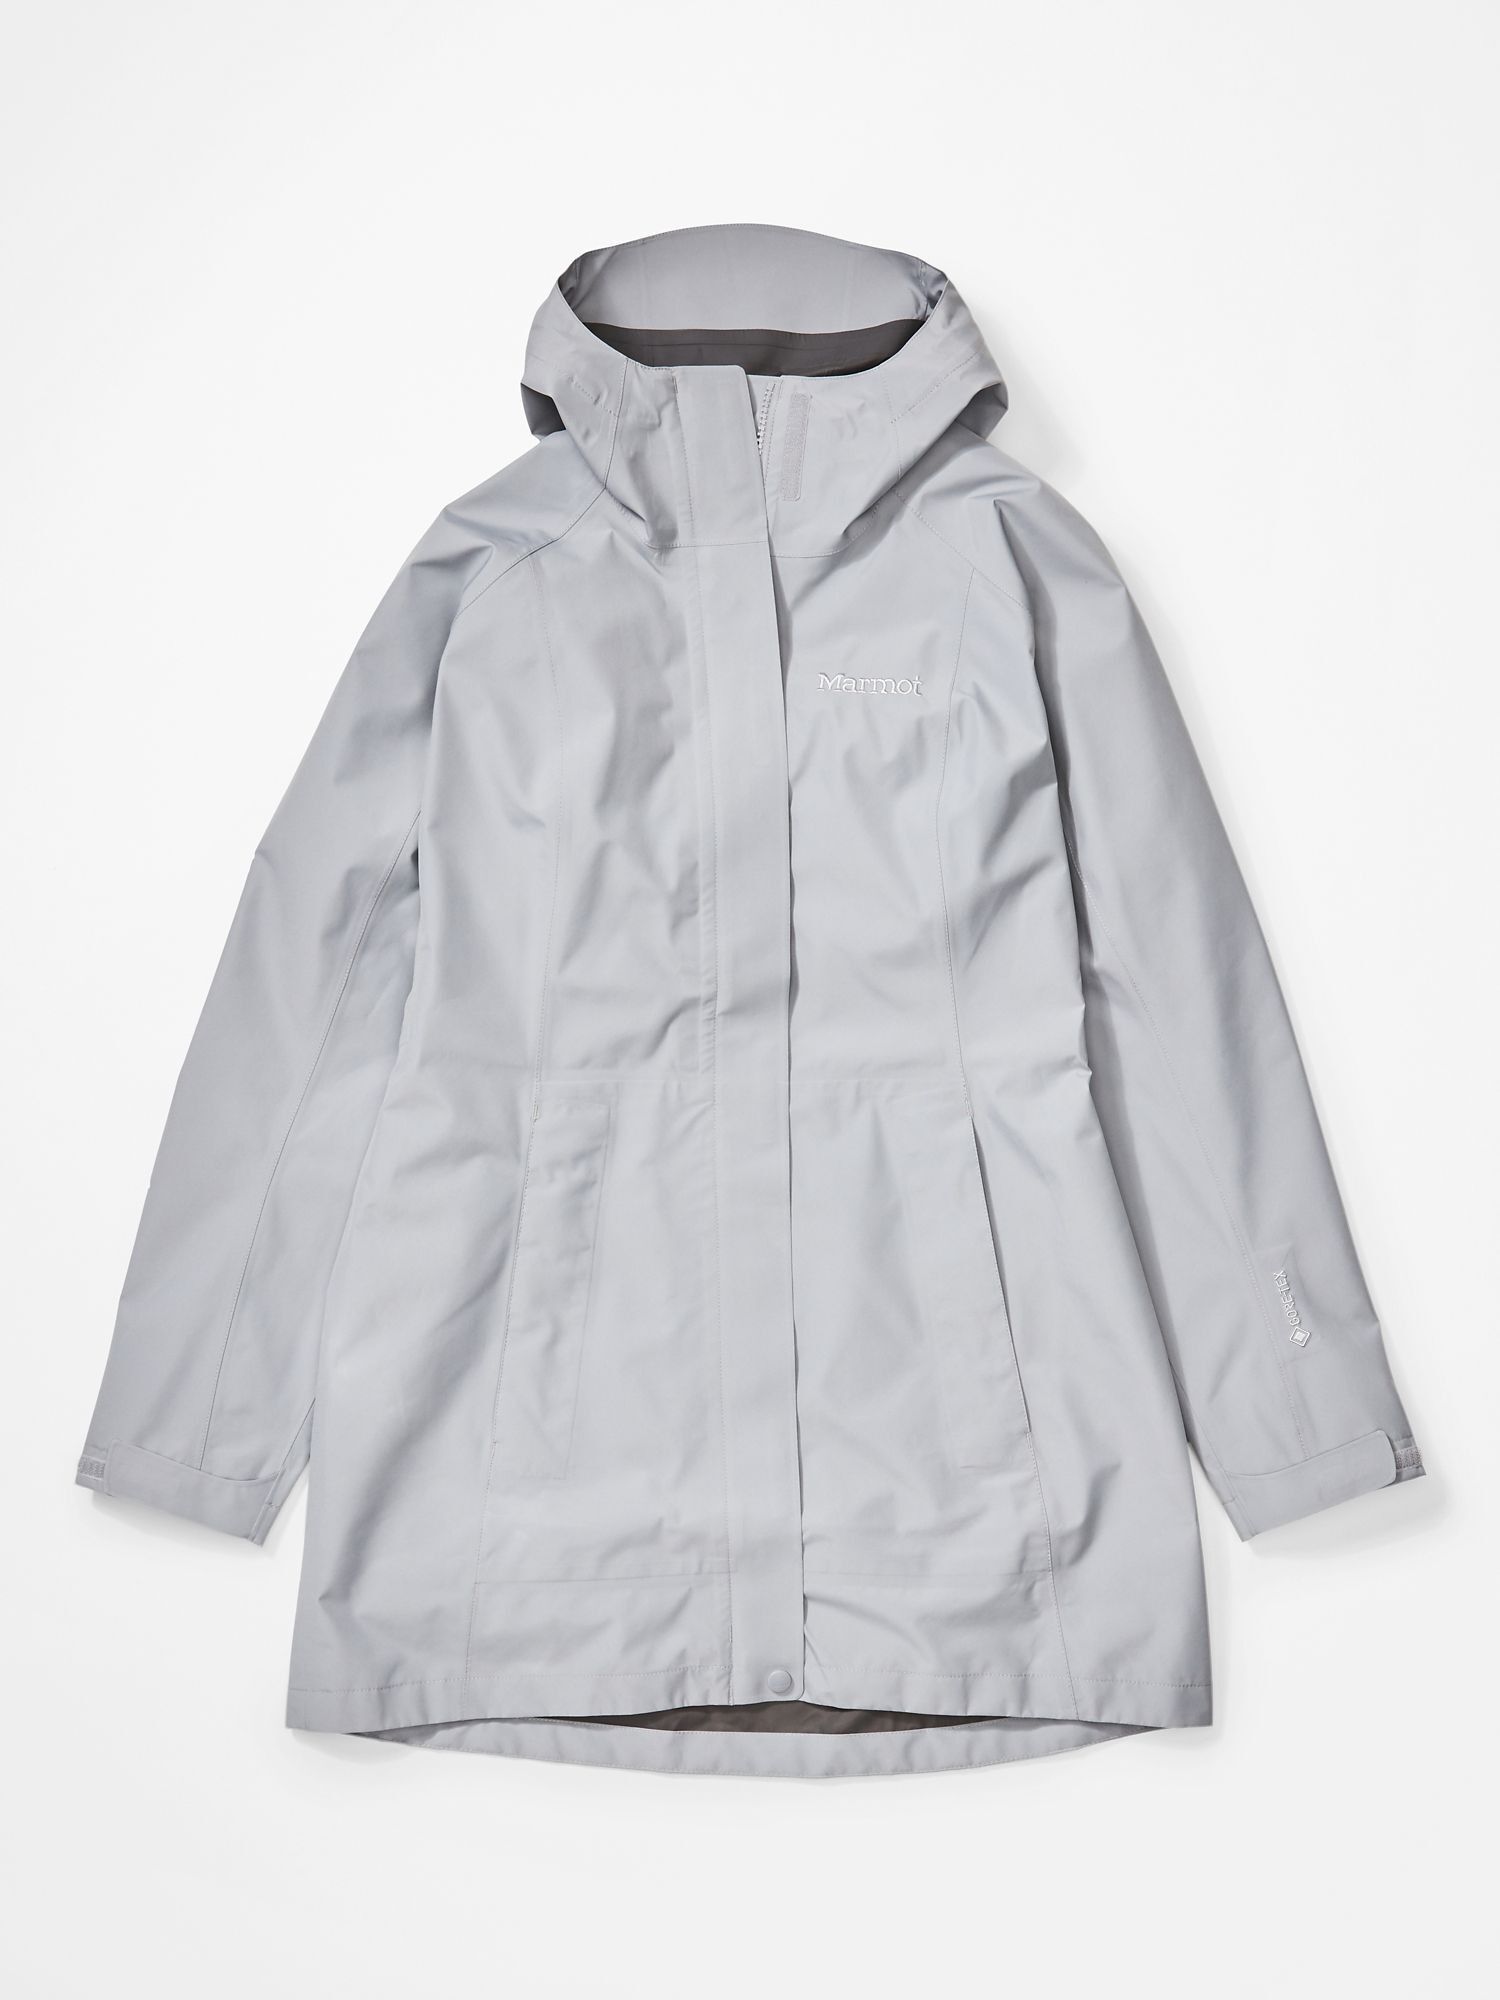 Marmot Essential Jacket - Hardshell jacket - Women's